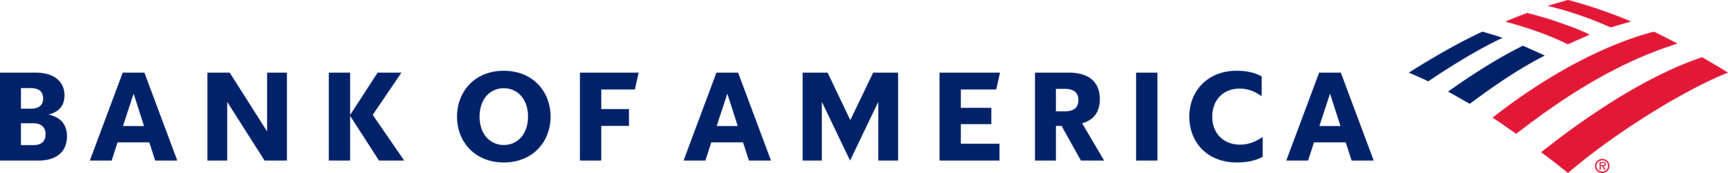 Bank of America Global Leasing - Global Corporate Aircraft Finance logo